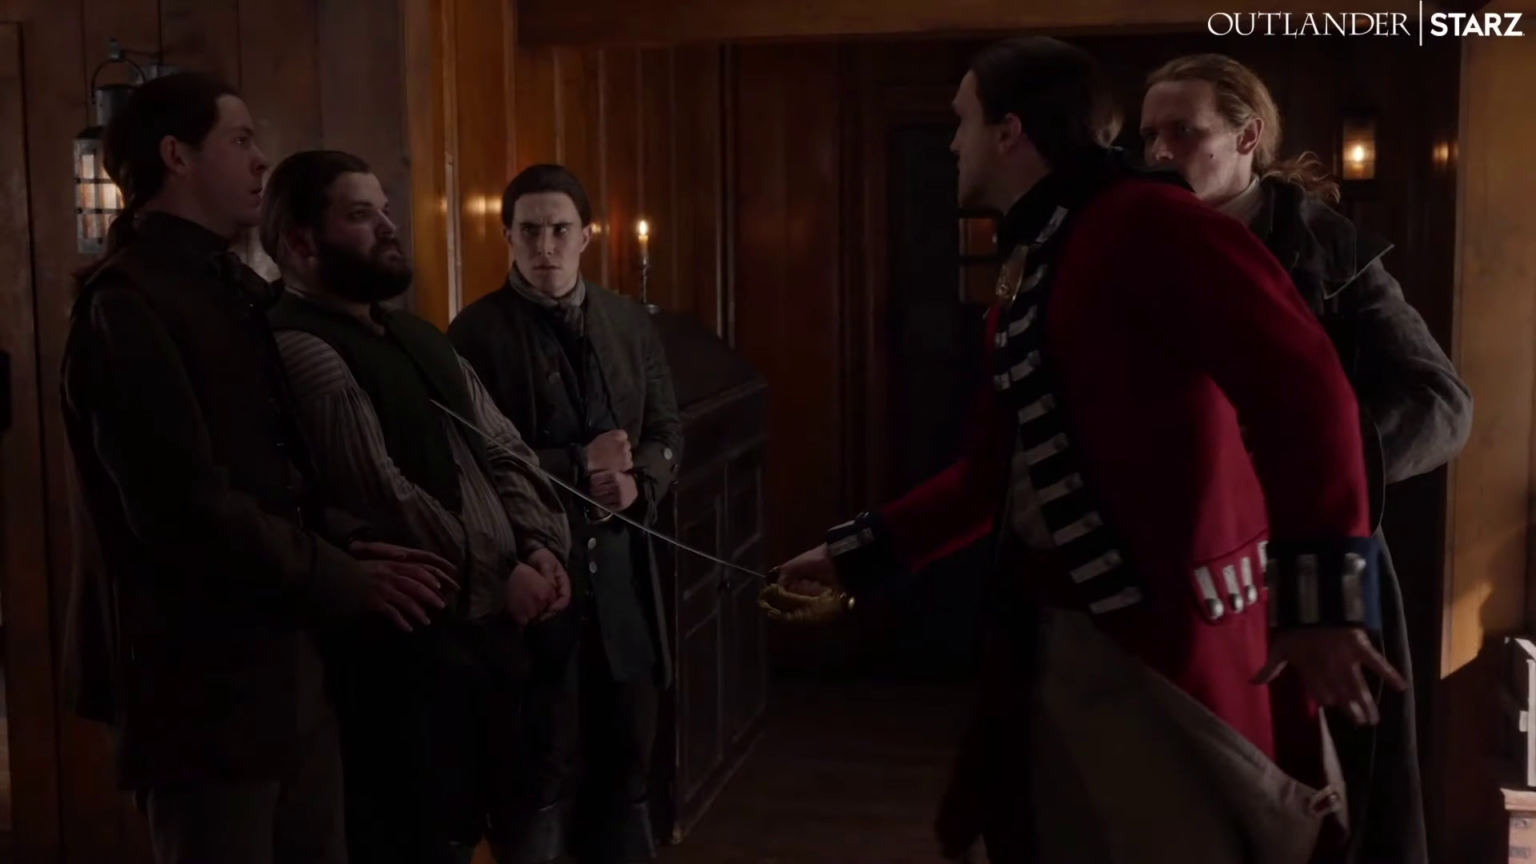 Preview for ‘Outlander’ Episode 502, “Between Two Fires” | Outlander TV ...